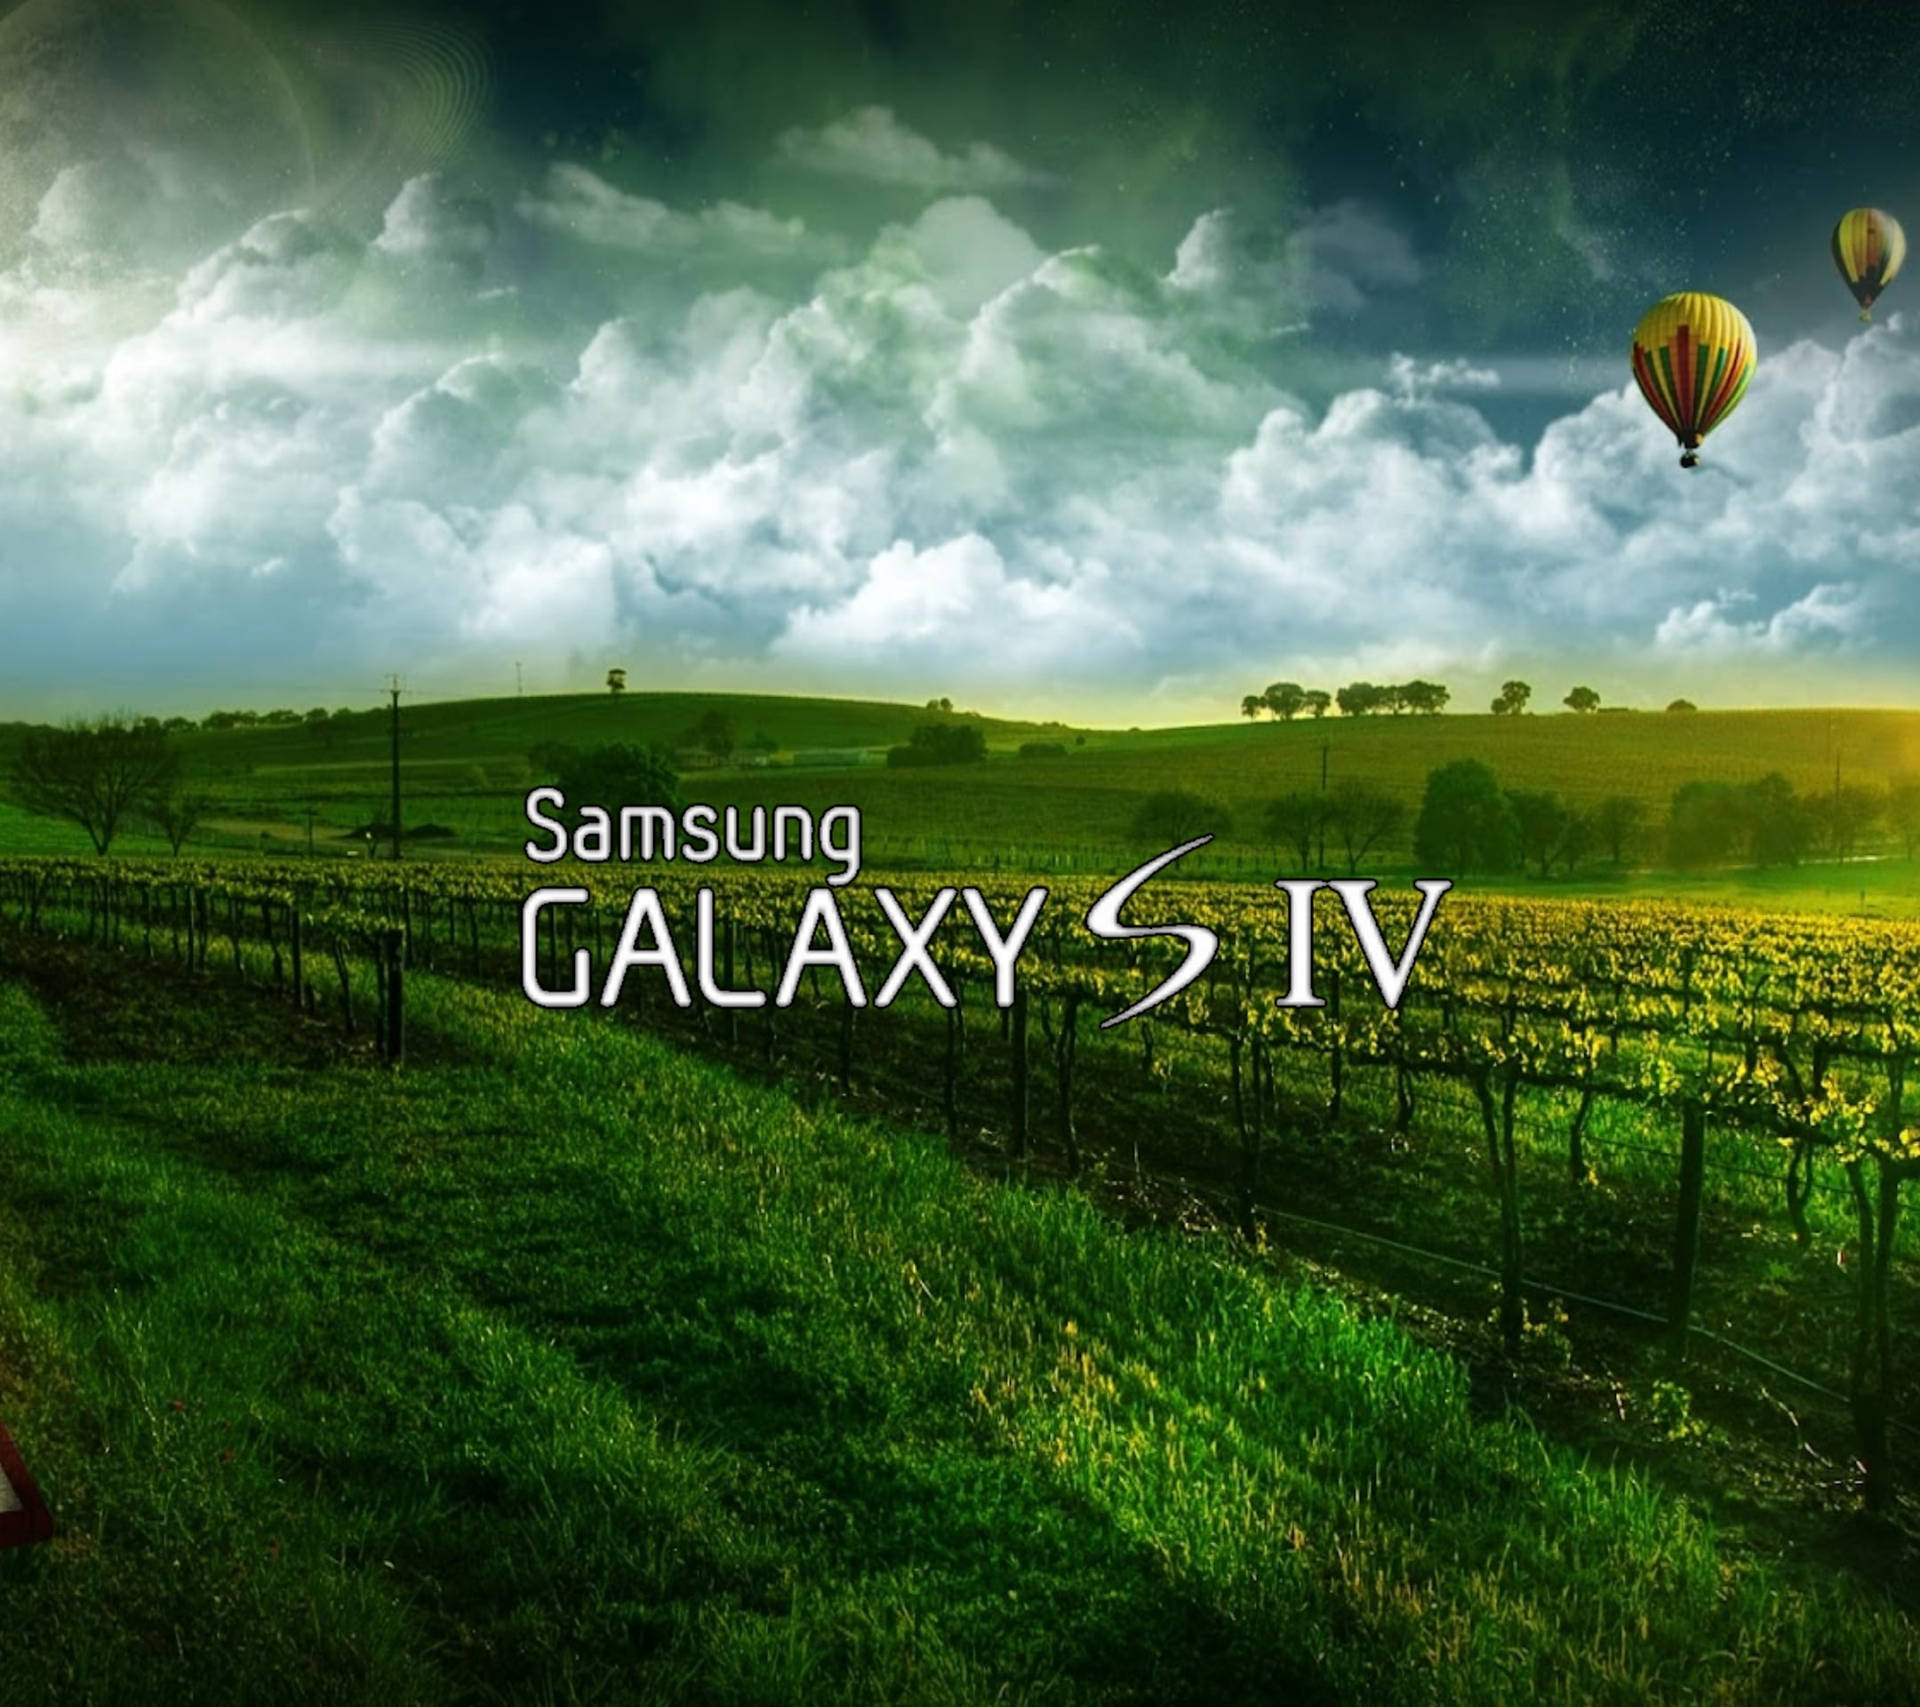 Immagini Samsung Galaxy S4